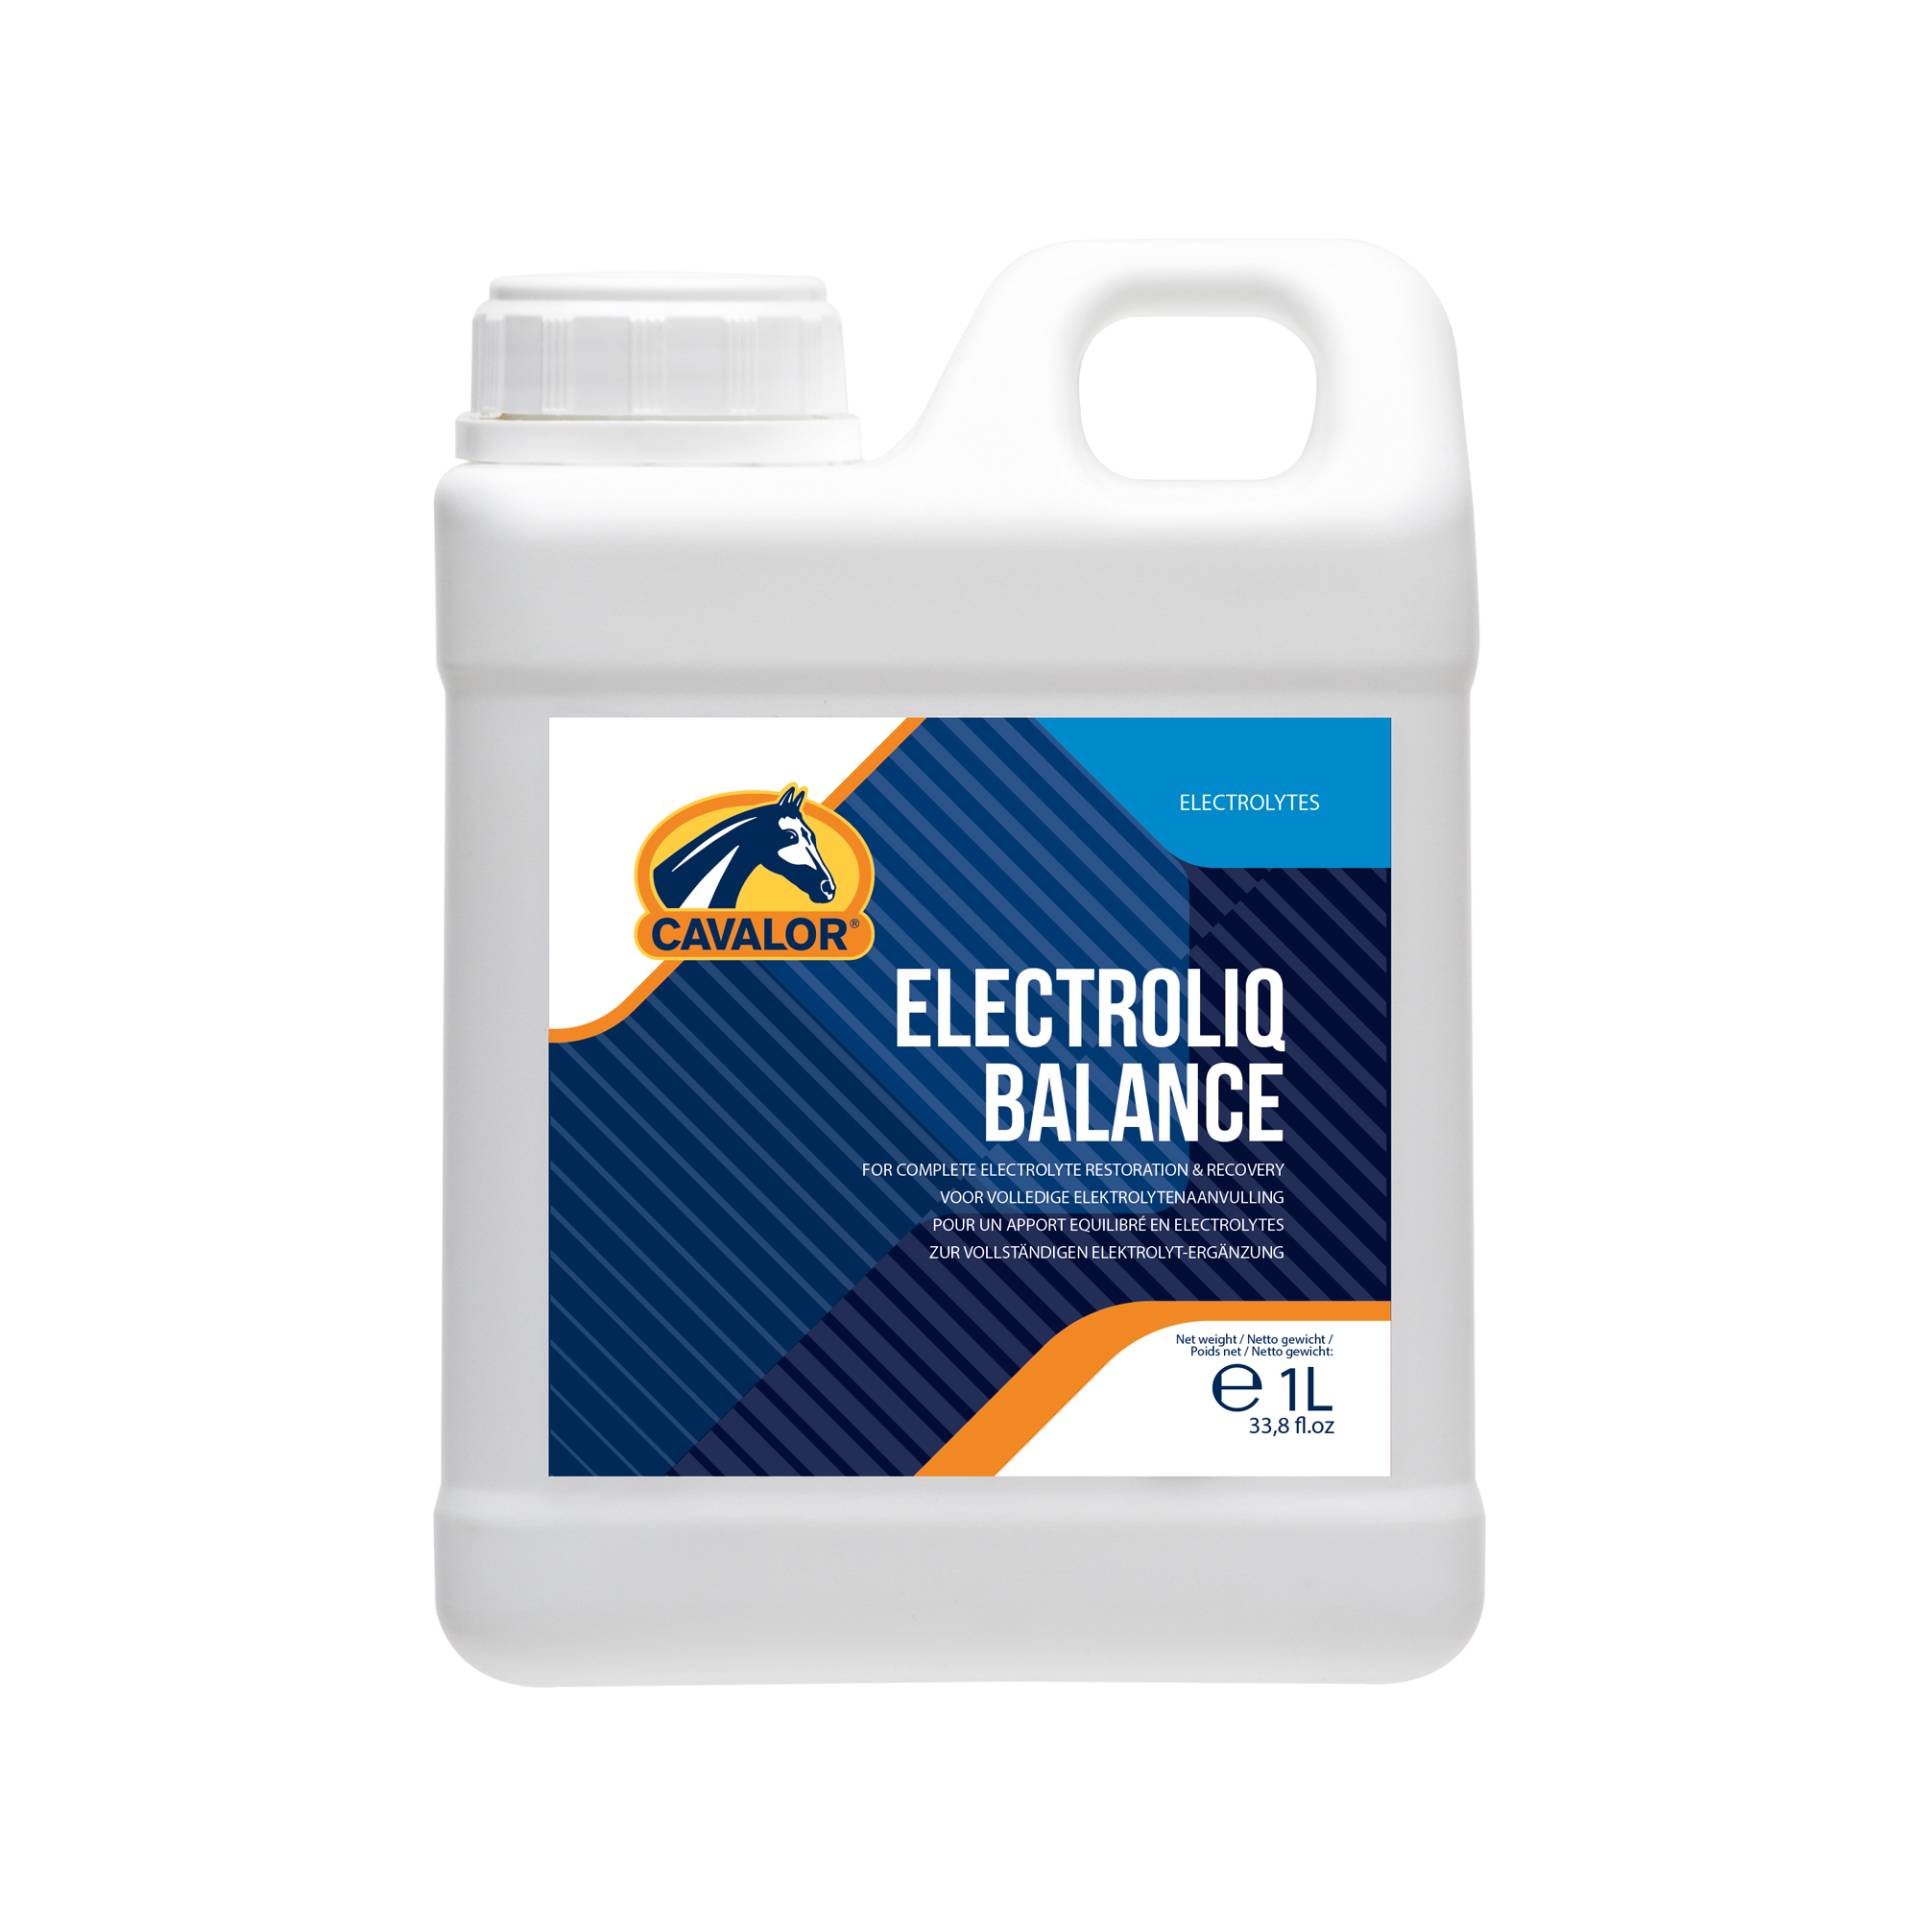 Cavalor Electroliq Balance - 1 Liter von Cavalor